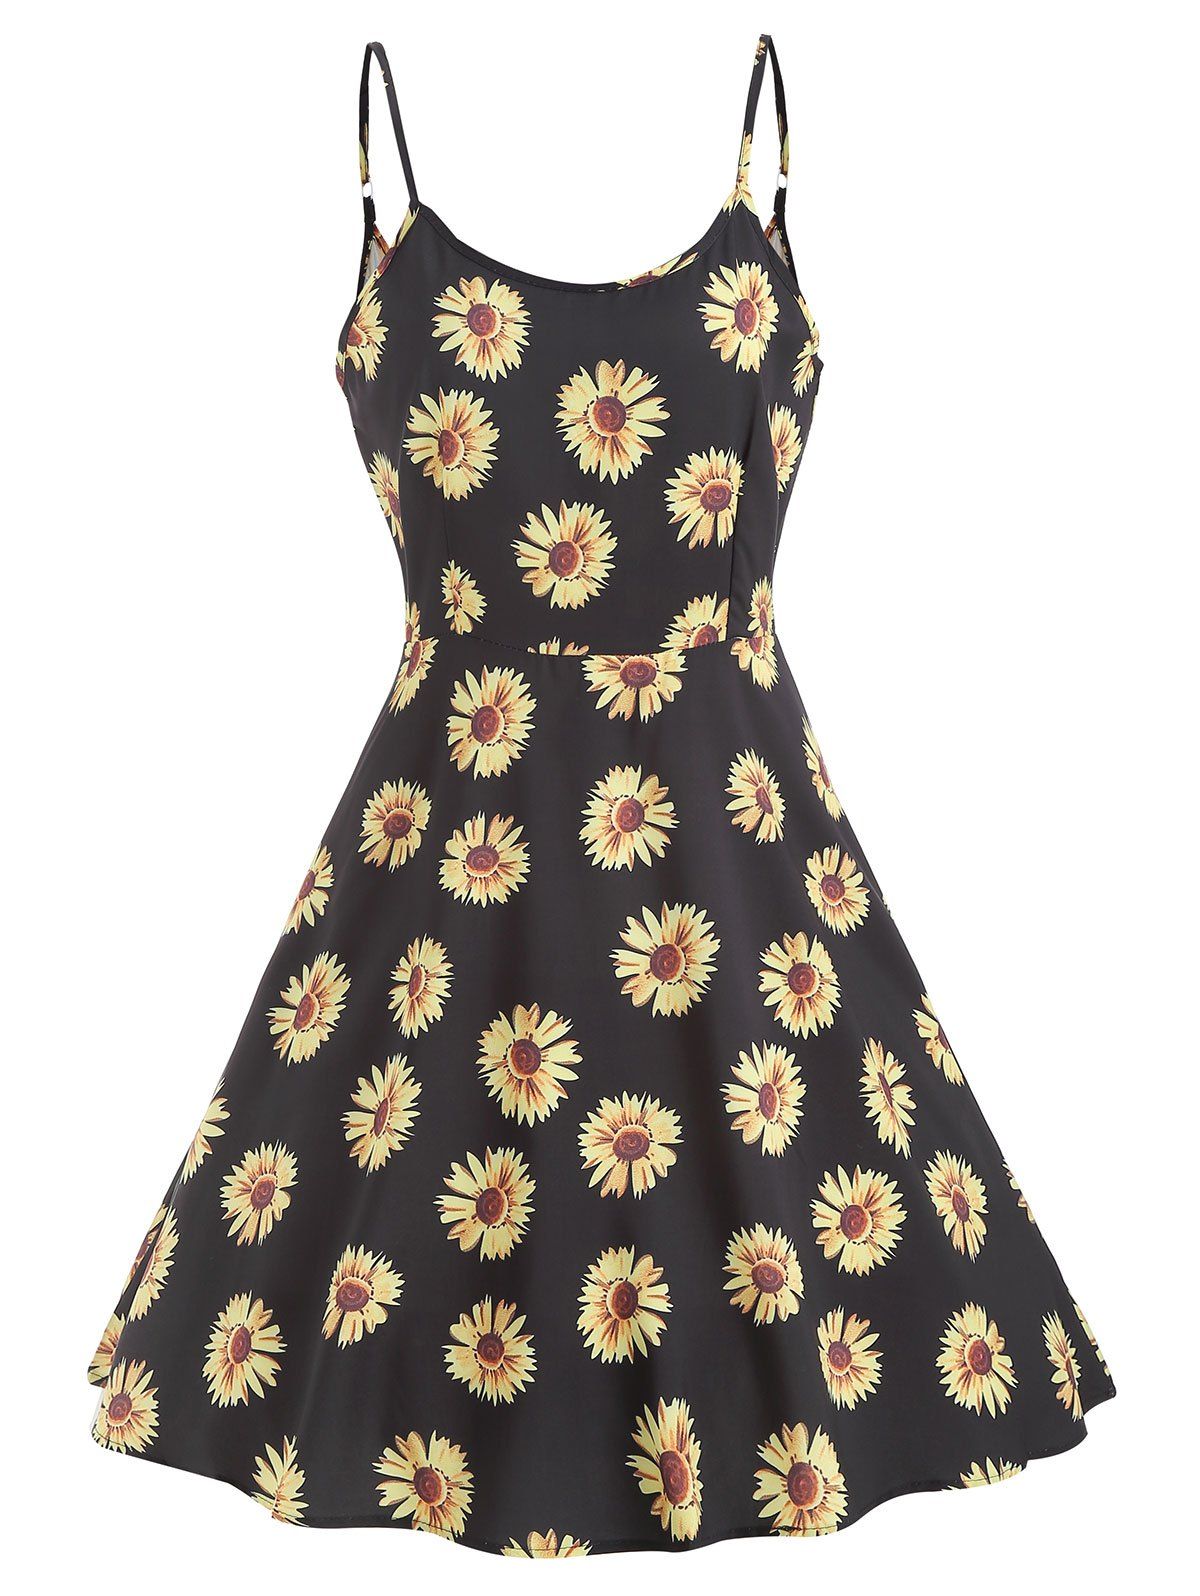 Sunflower Print High Waist Mini Dress - BLACK M